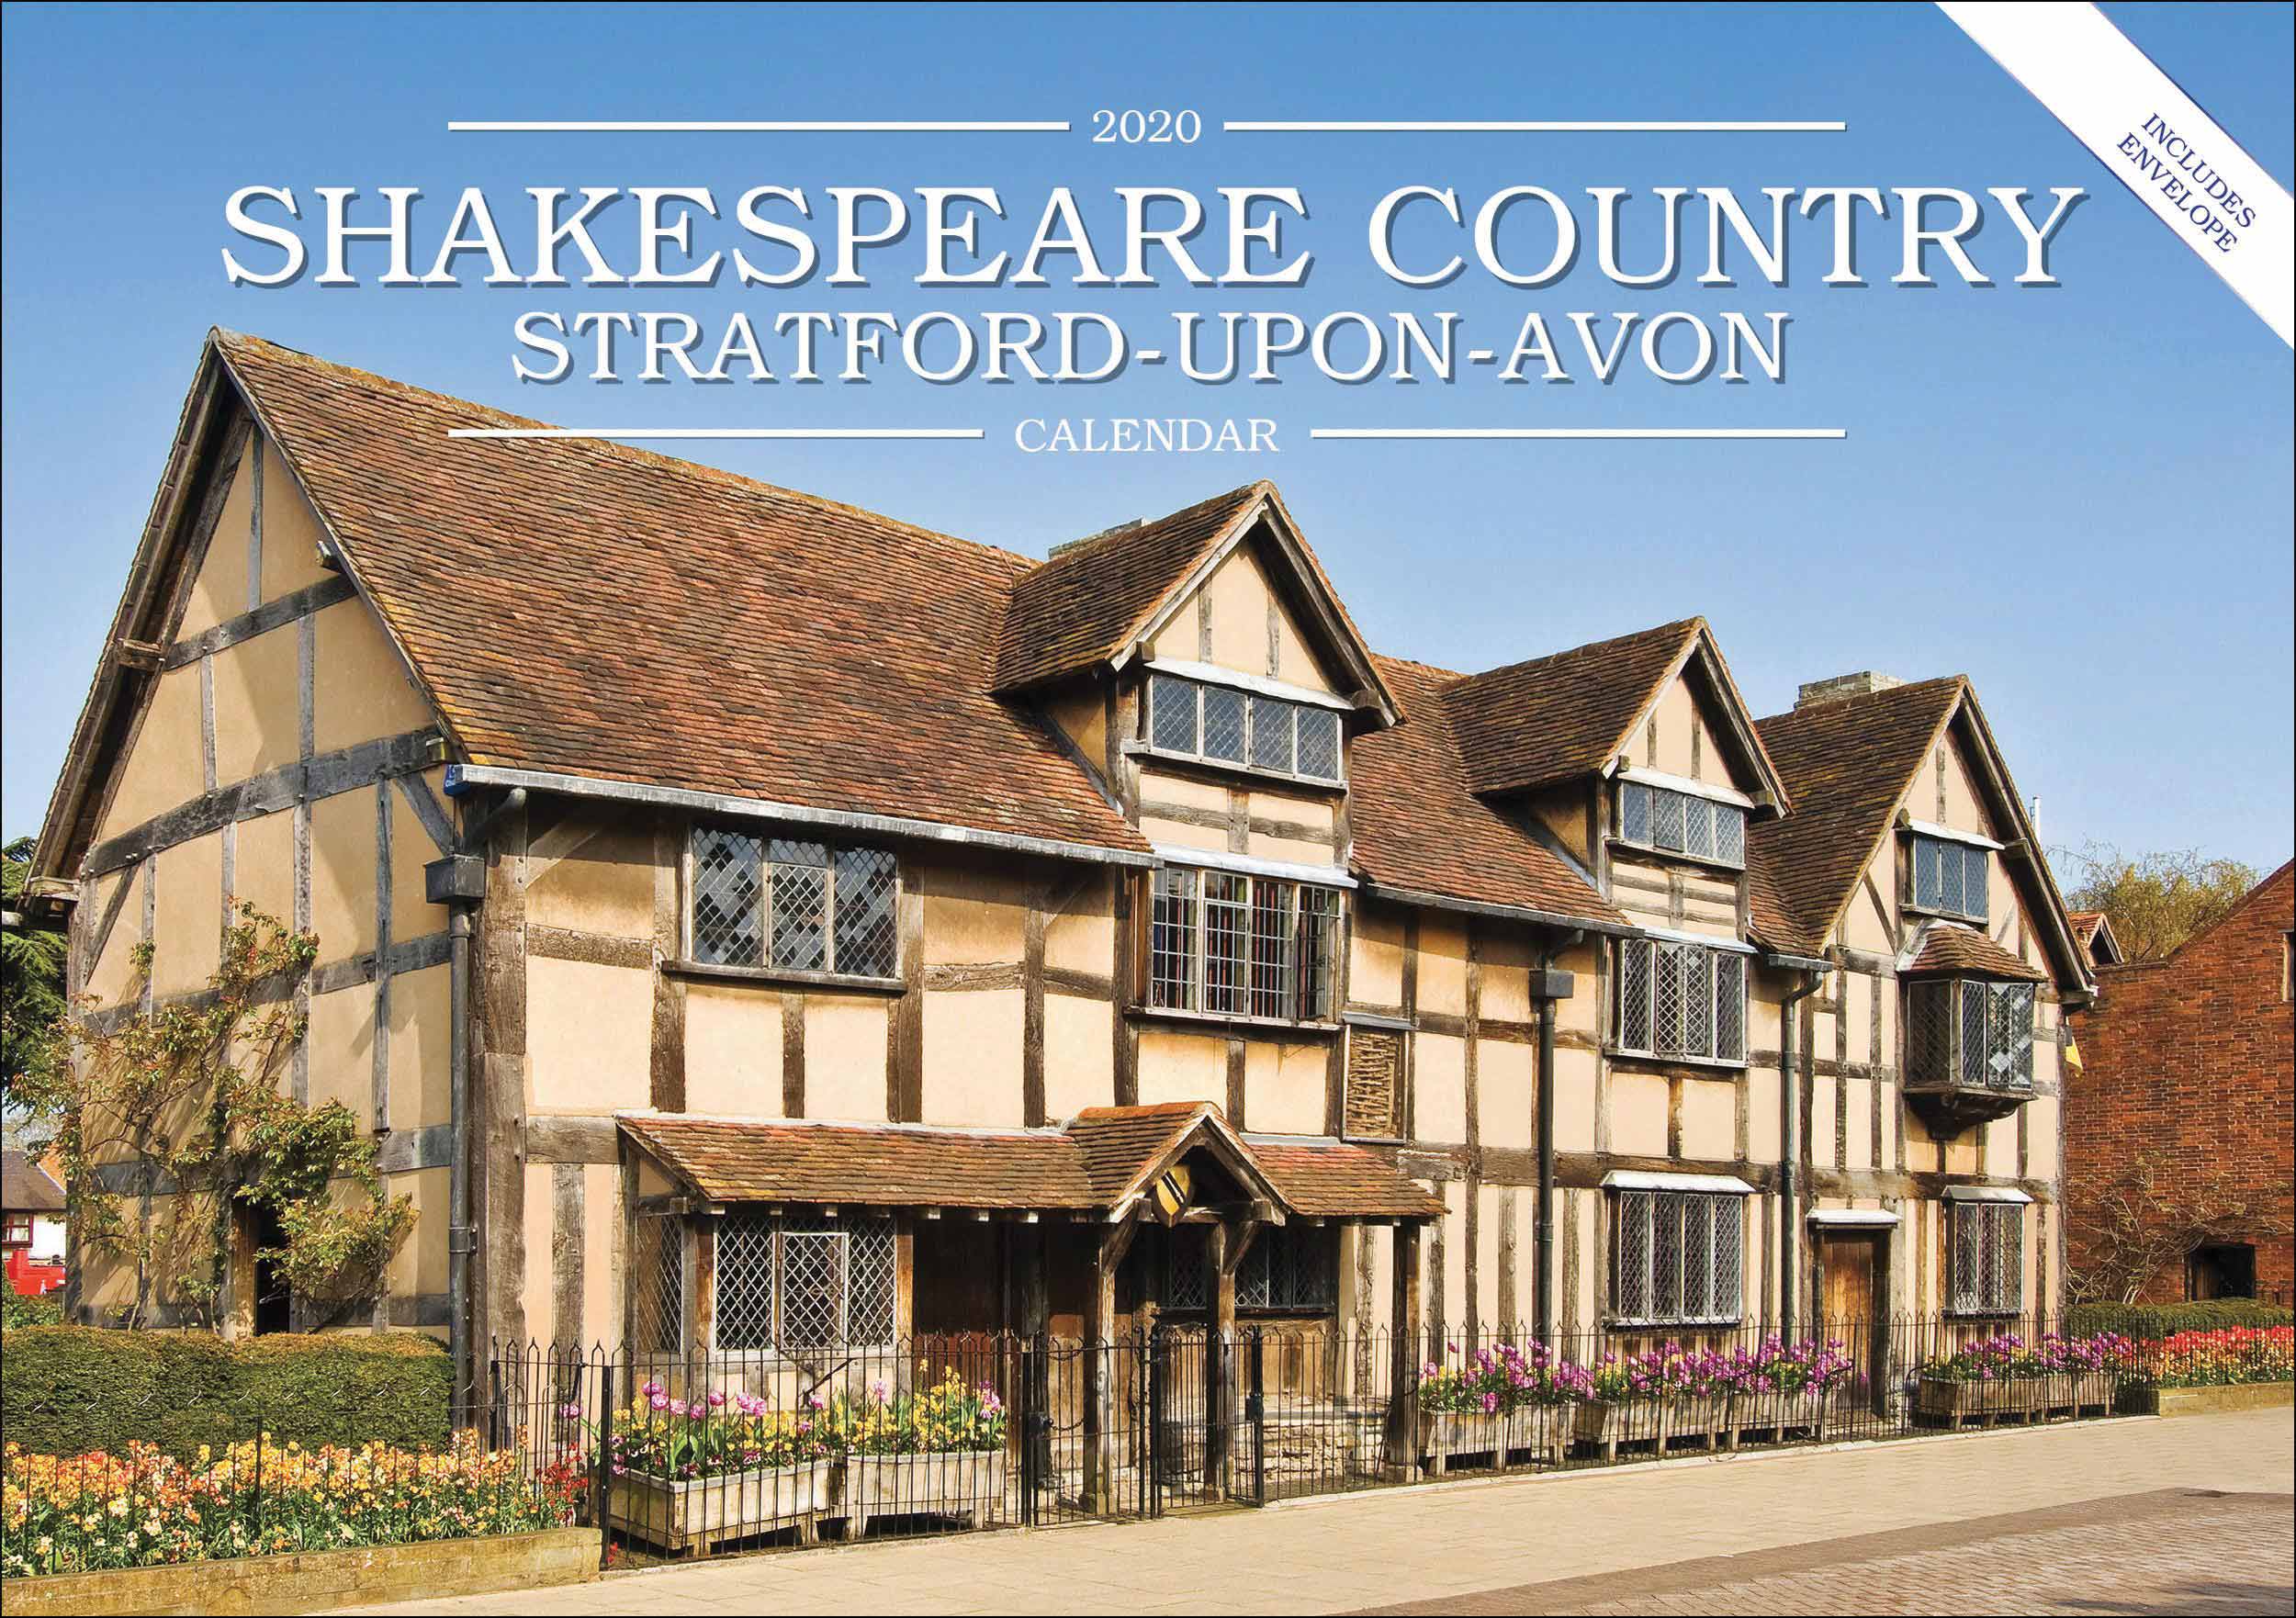 Stratford upon avon shakespeare. Stratford-upon-Avon Шекспир. Стратфорд-апон-эйвон Шекспир. Страфорд НАЭВОНЕ город Шекспира. Шекспир Birthplace.